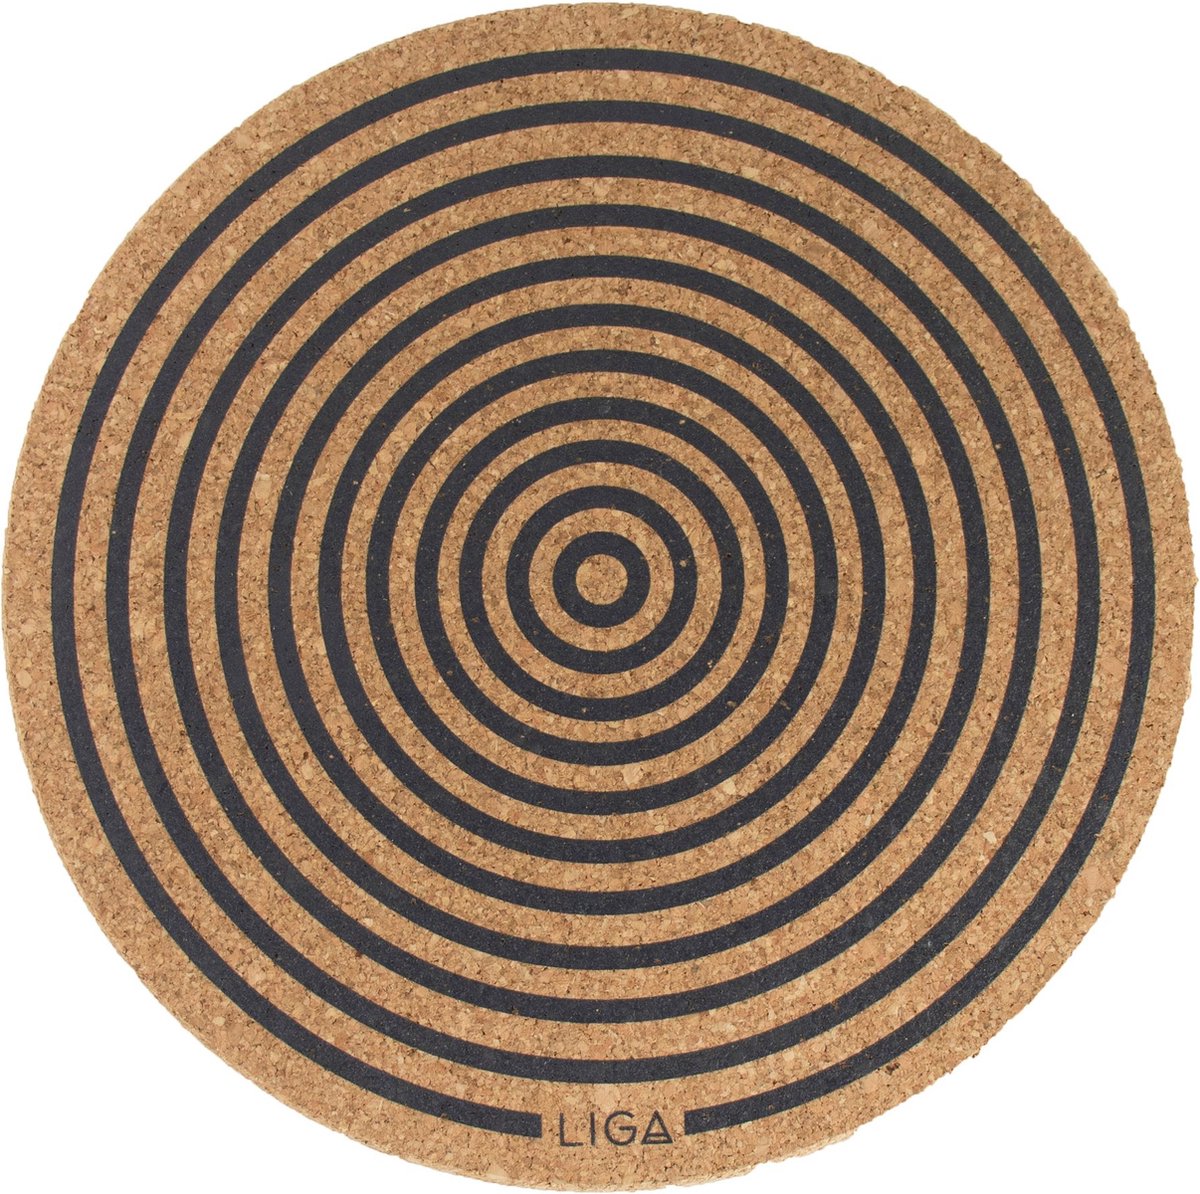 LIGA - Placemat Orbit Ø 25 cm Set van 4 Stuks - Kurk - Beige